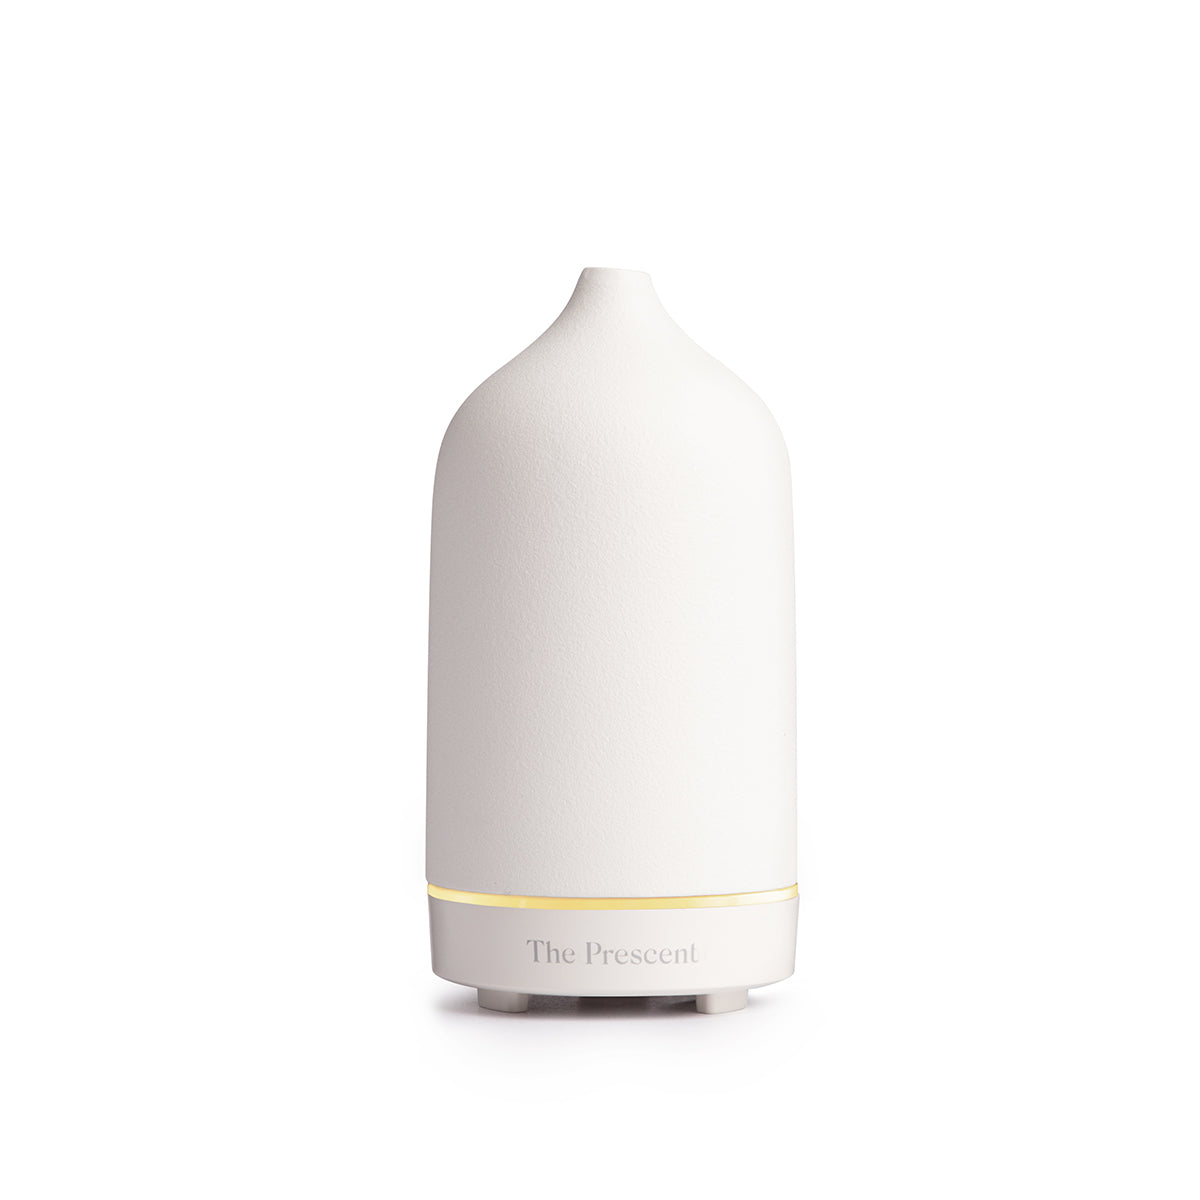 White Porcelain Ceramic Aroma Humidifier เครื่องพ่นไอน้ำอโรม่า เซรามิกพอร์ซเลน